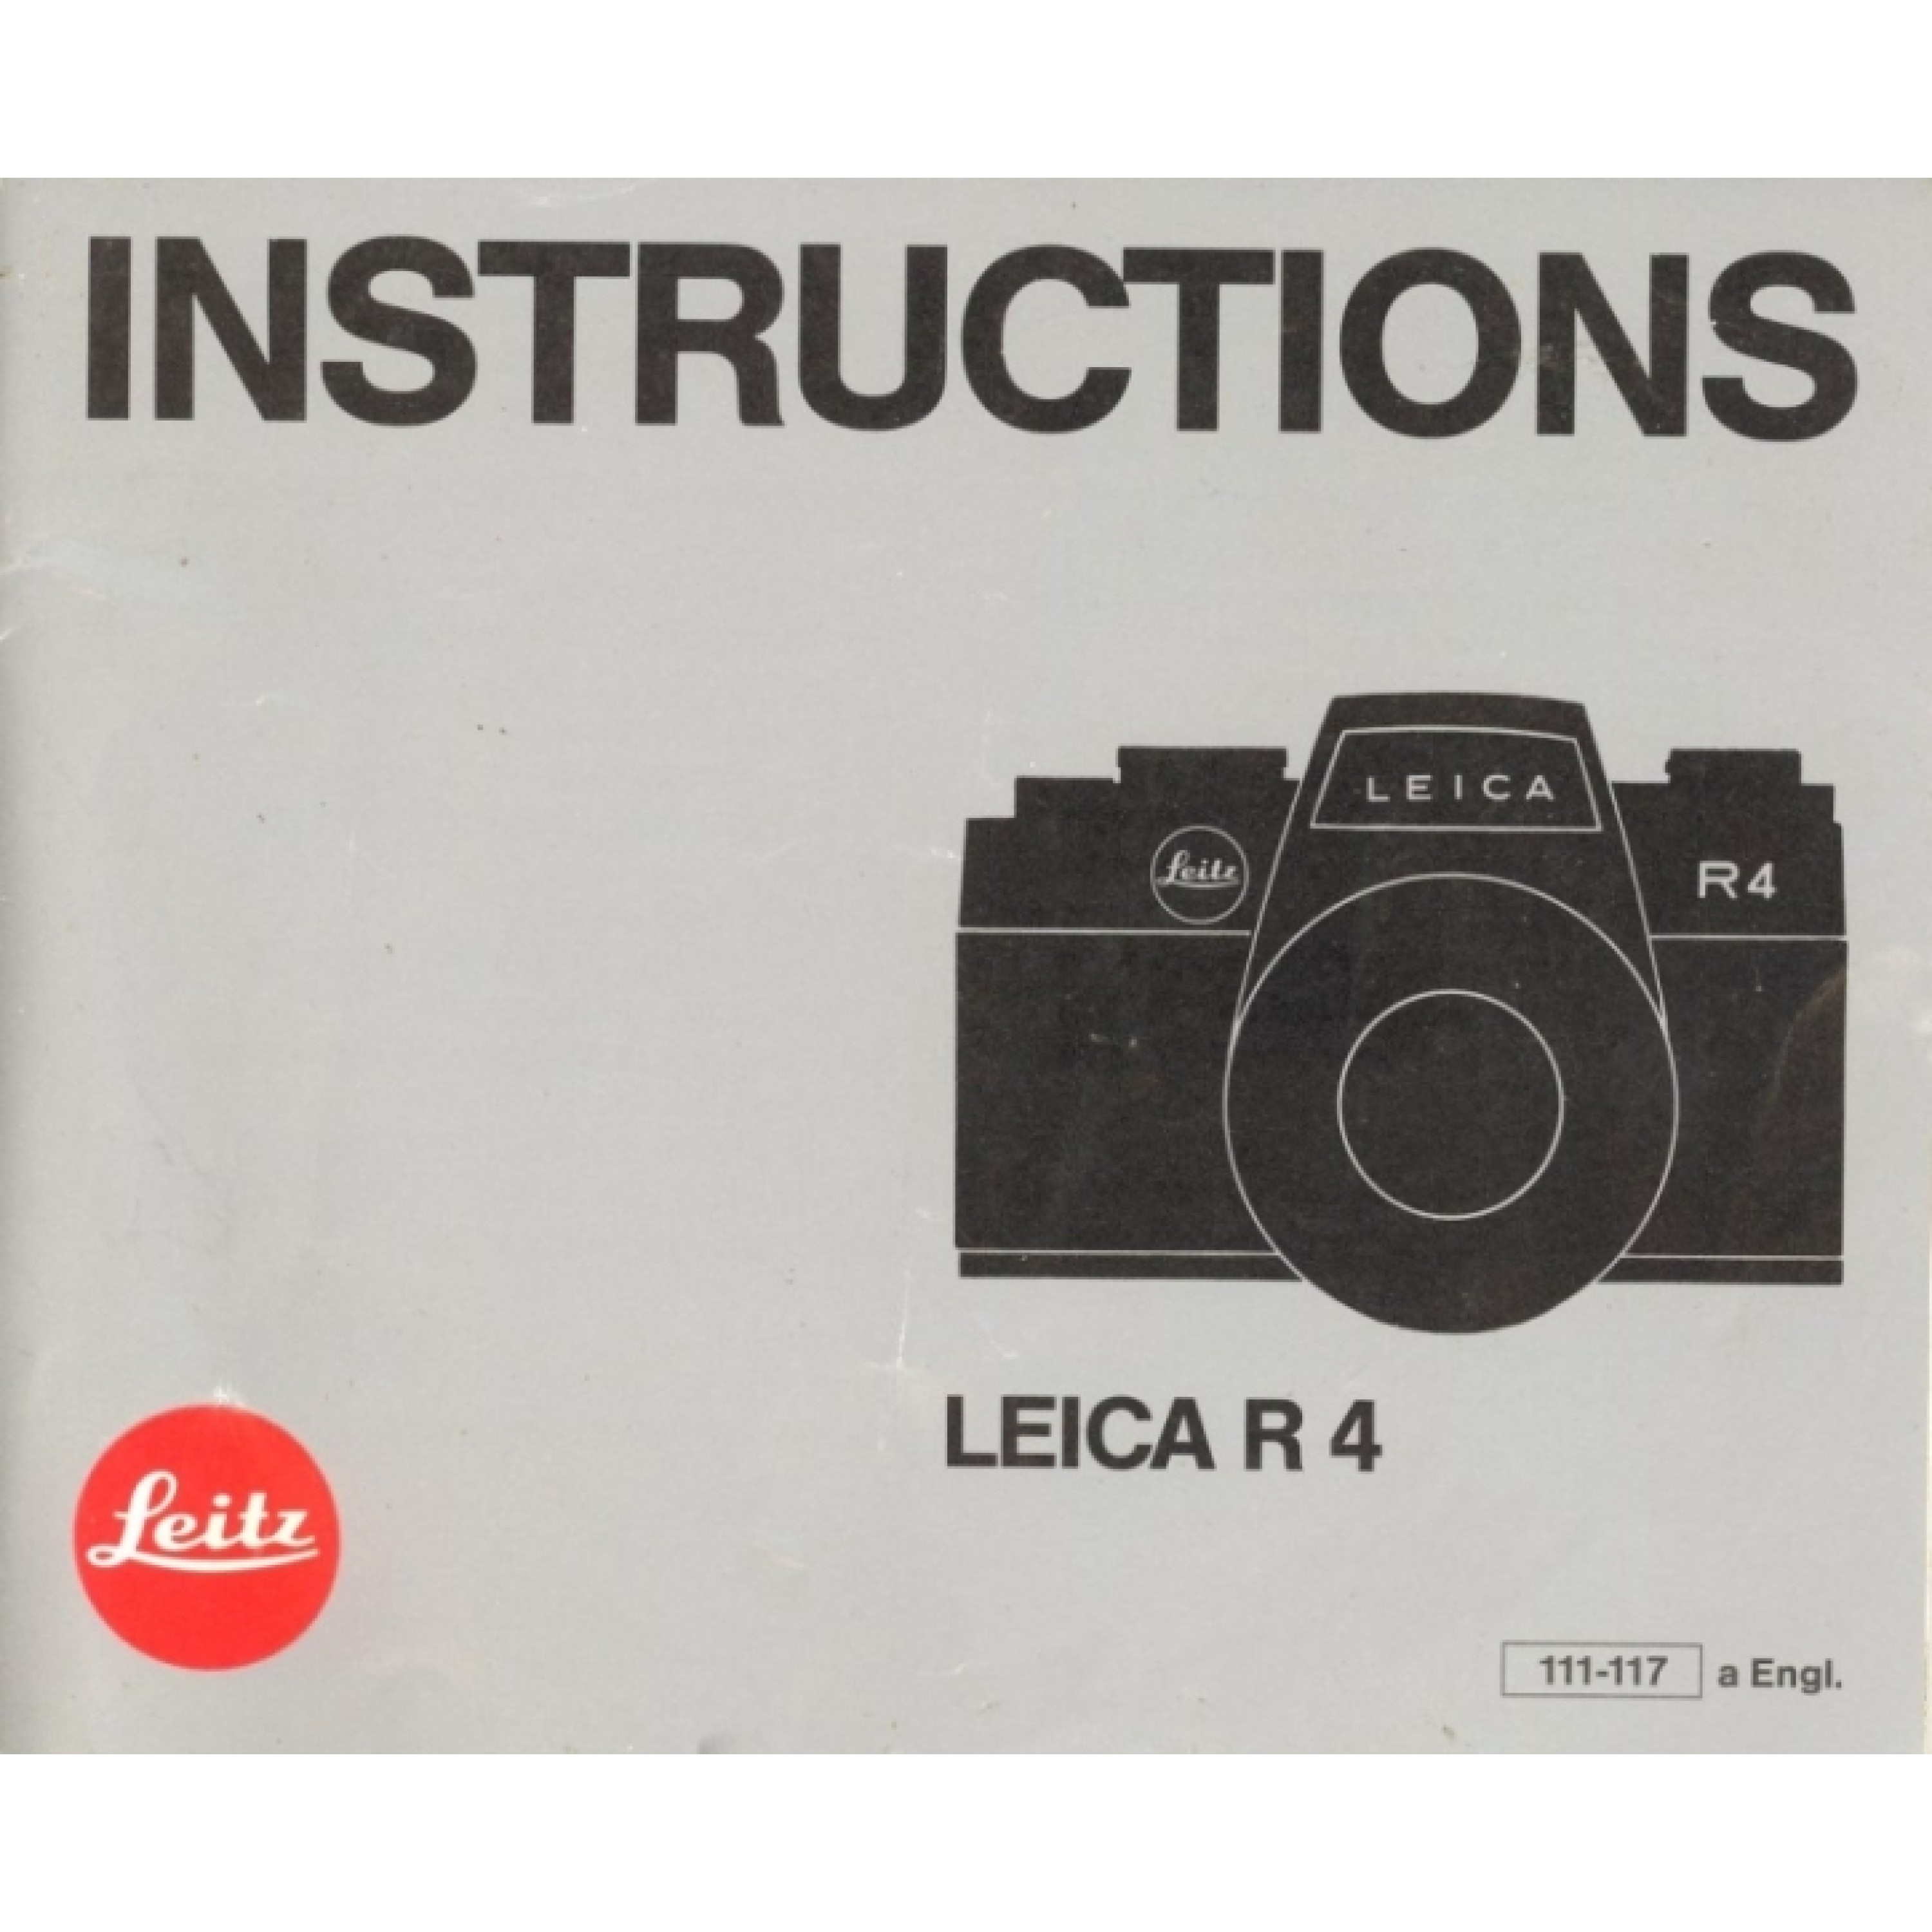 Leica r4 camera operating instructions manual